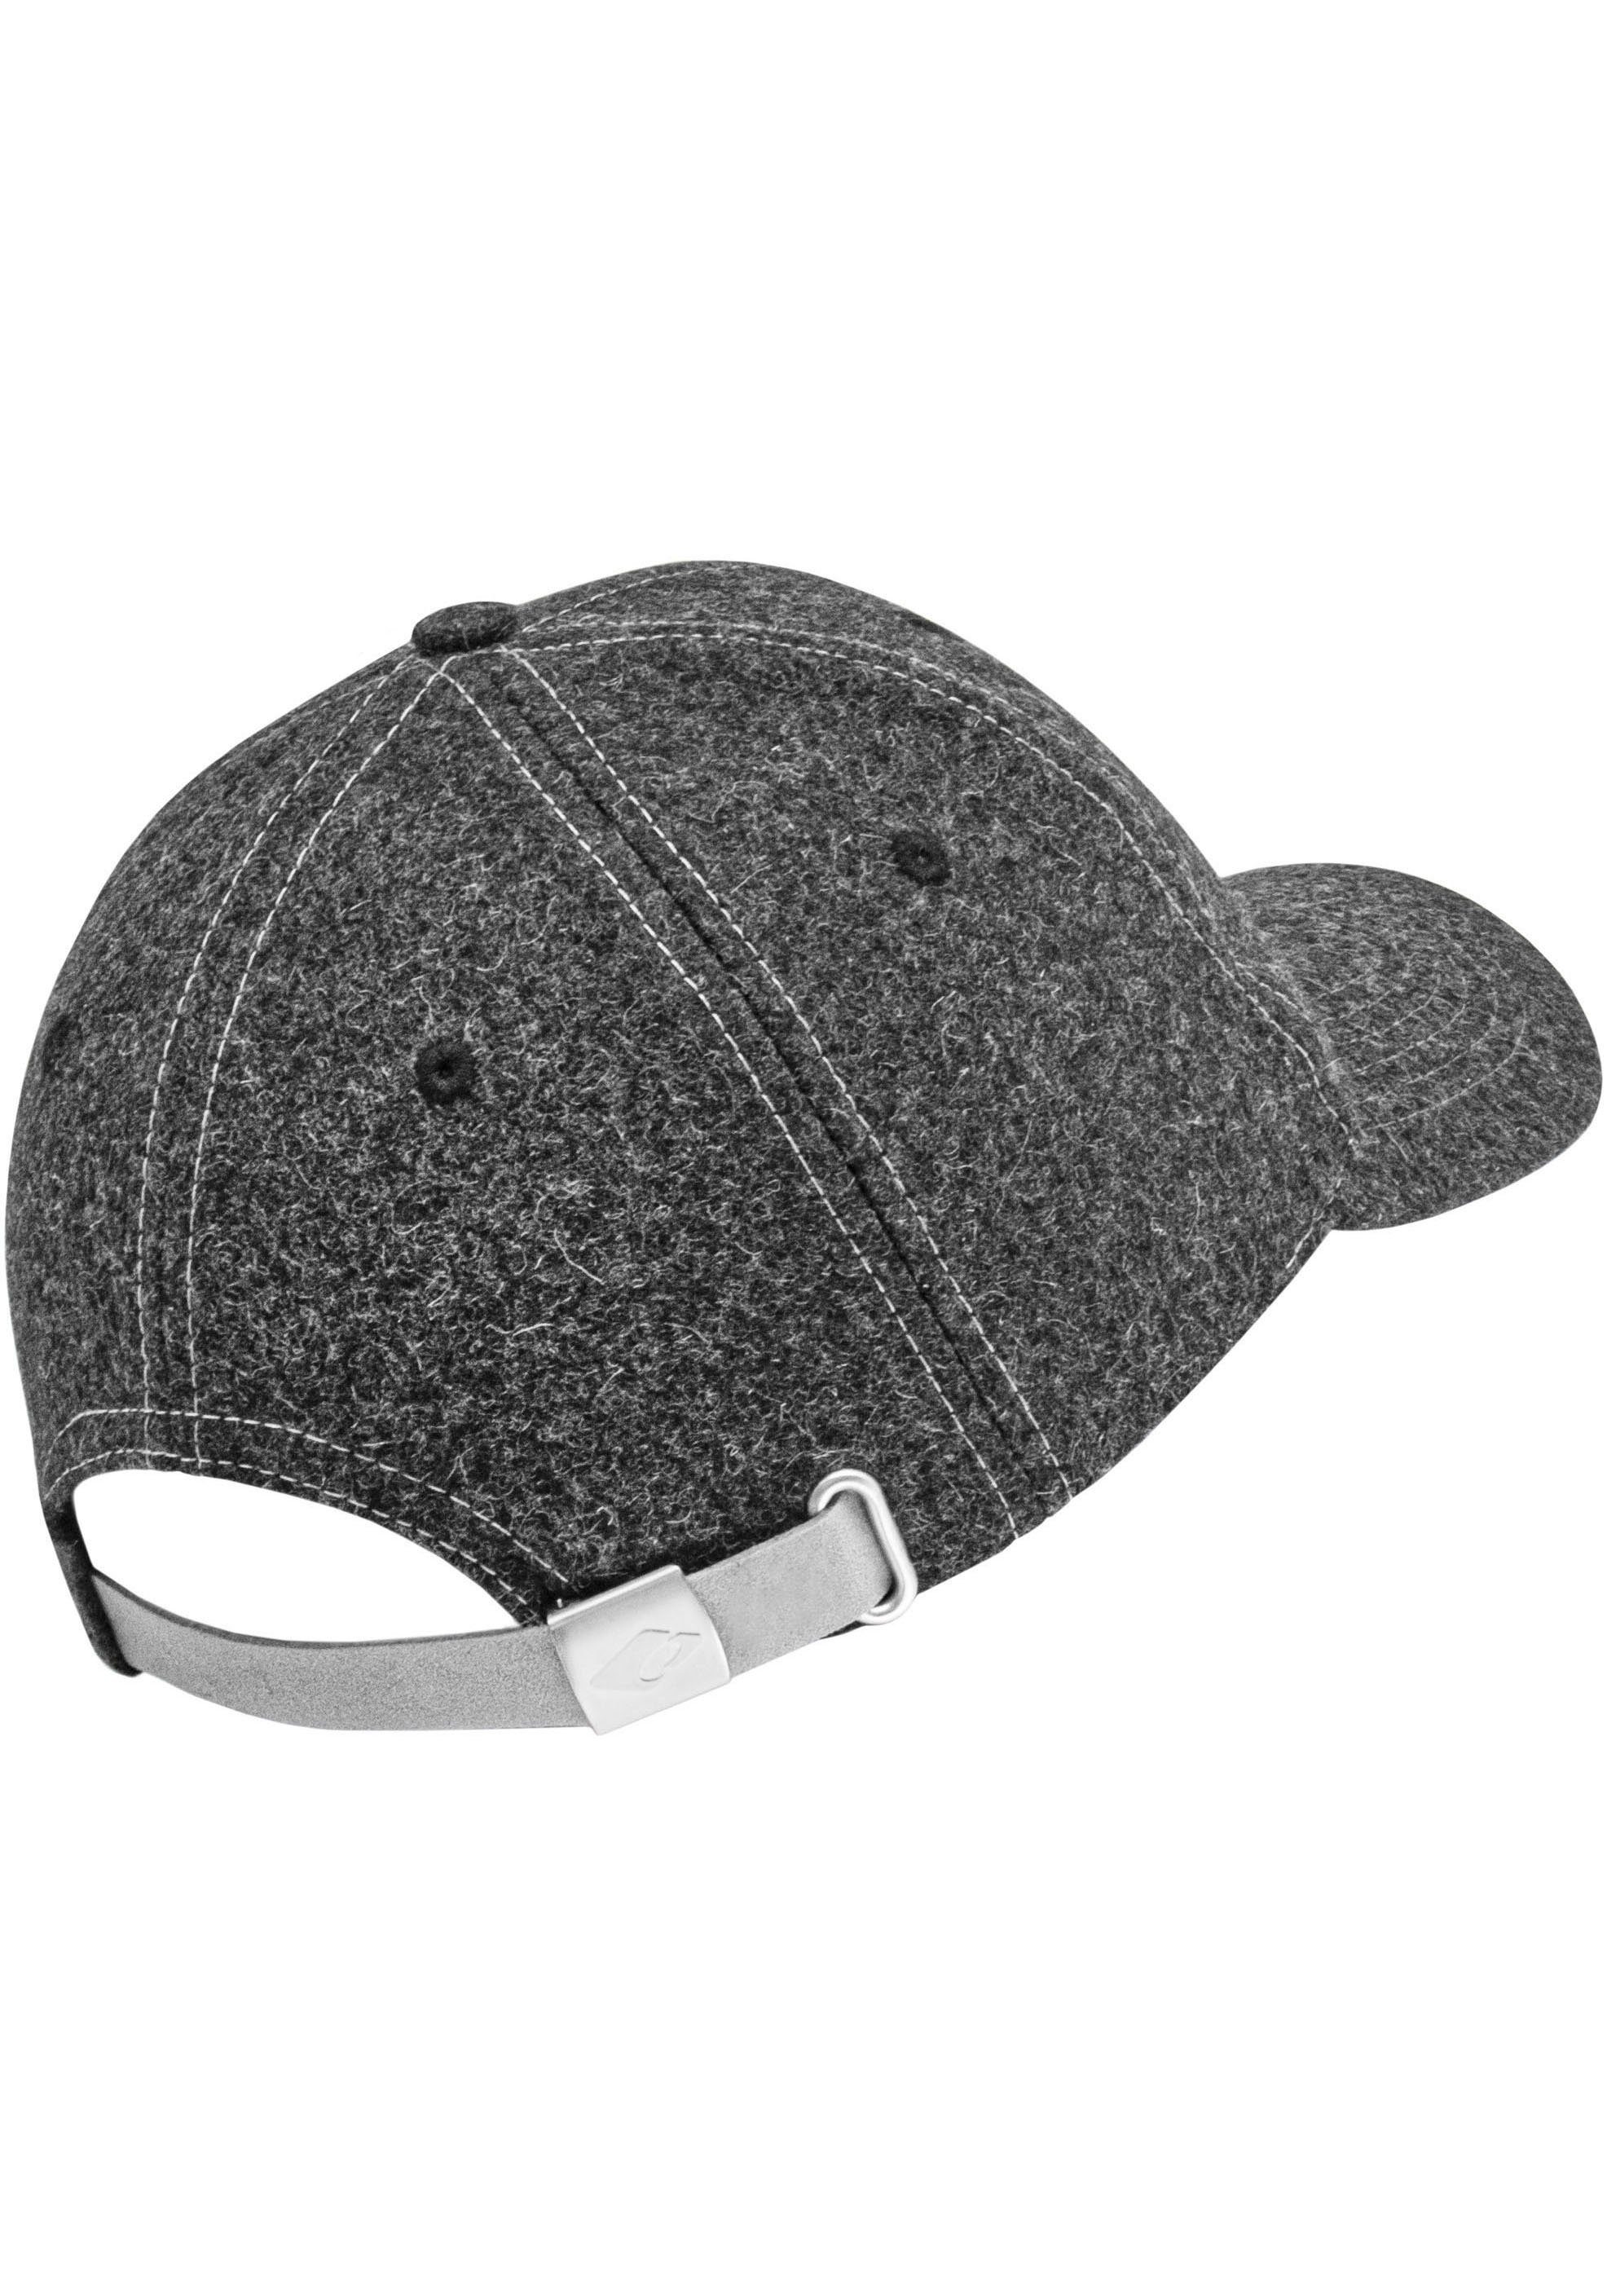 dark Hat Wasserabweisendes Material chillouts Mateo Baseball grey Cap